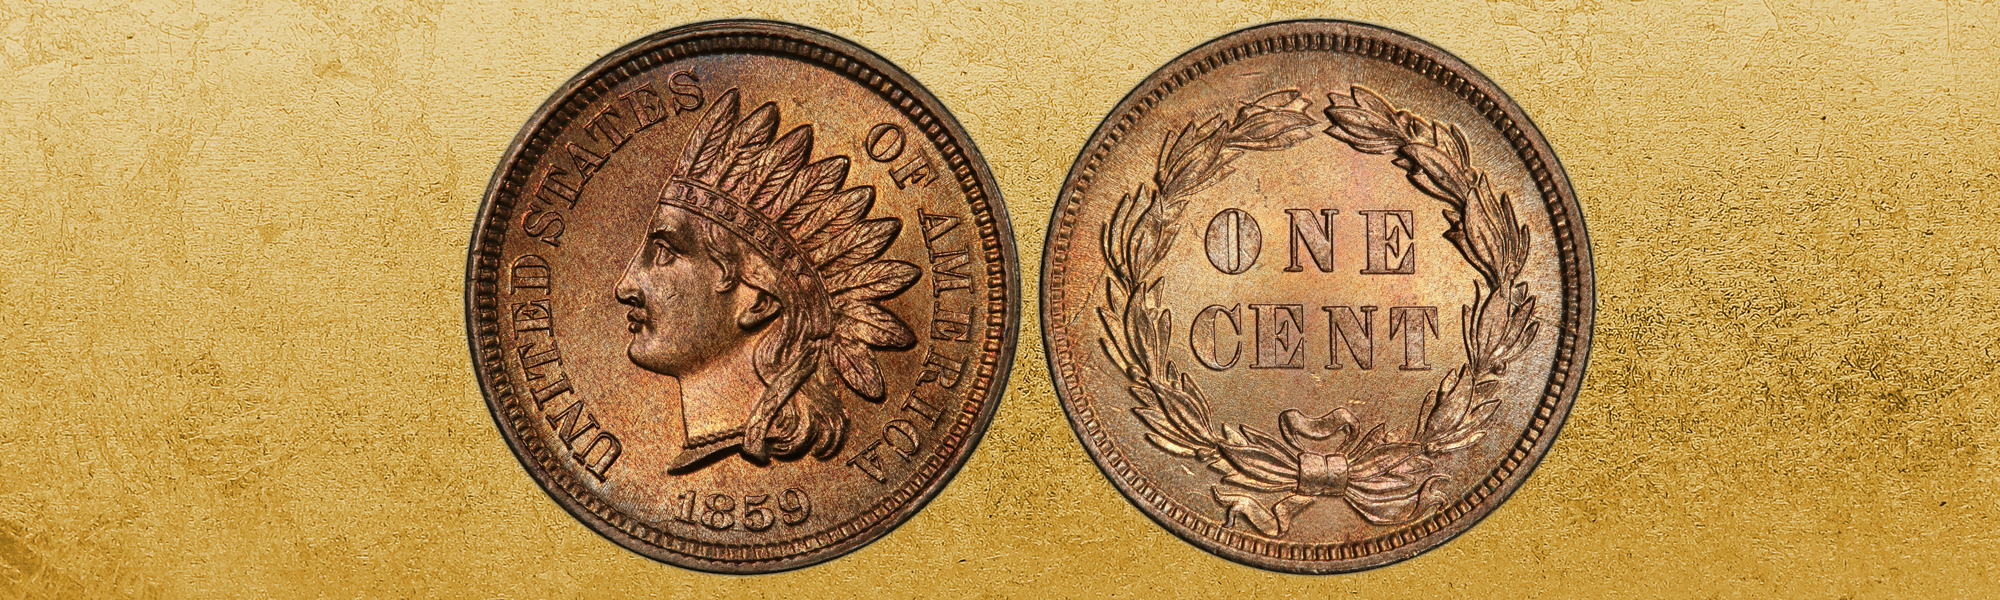 USA 1 Cent Indian Head 1895